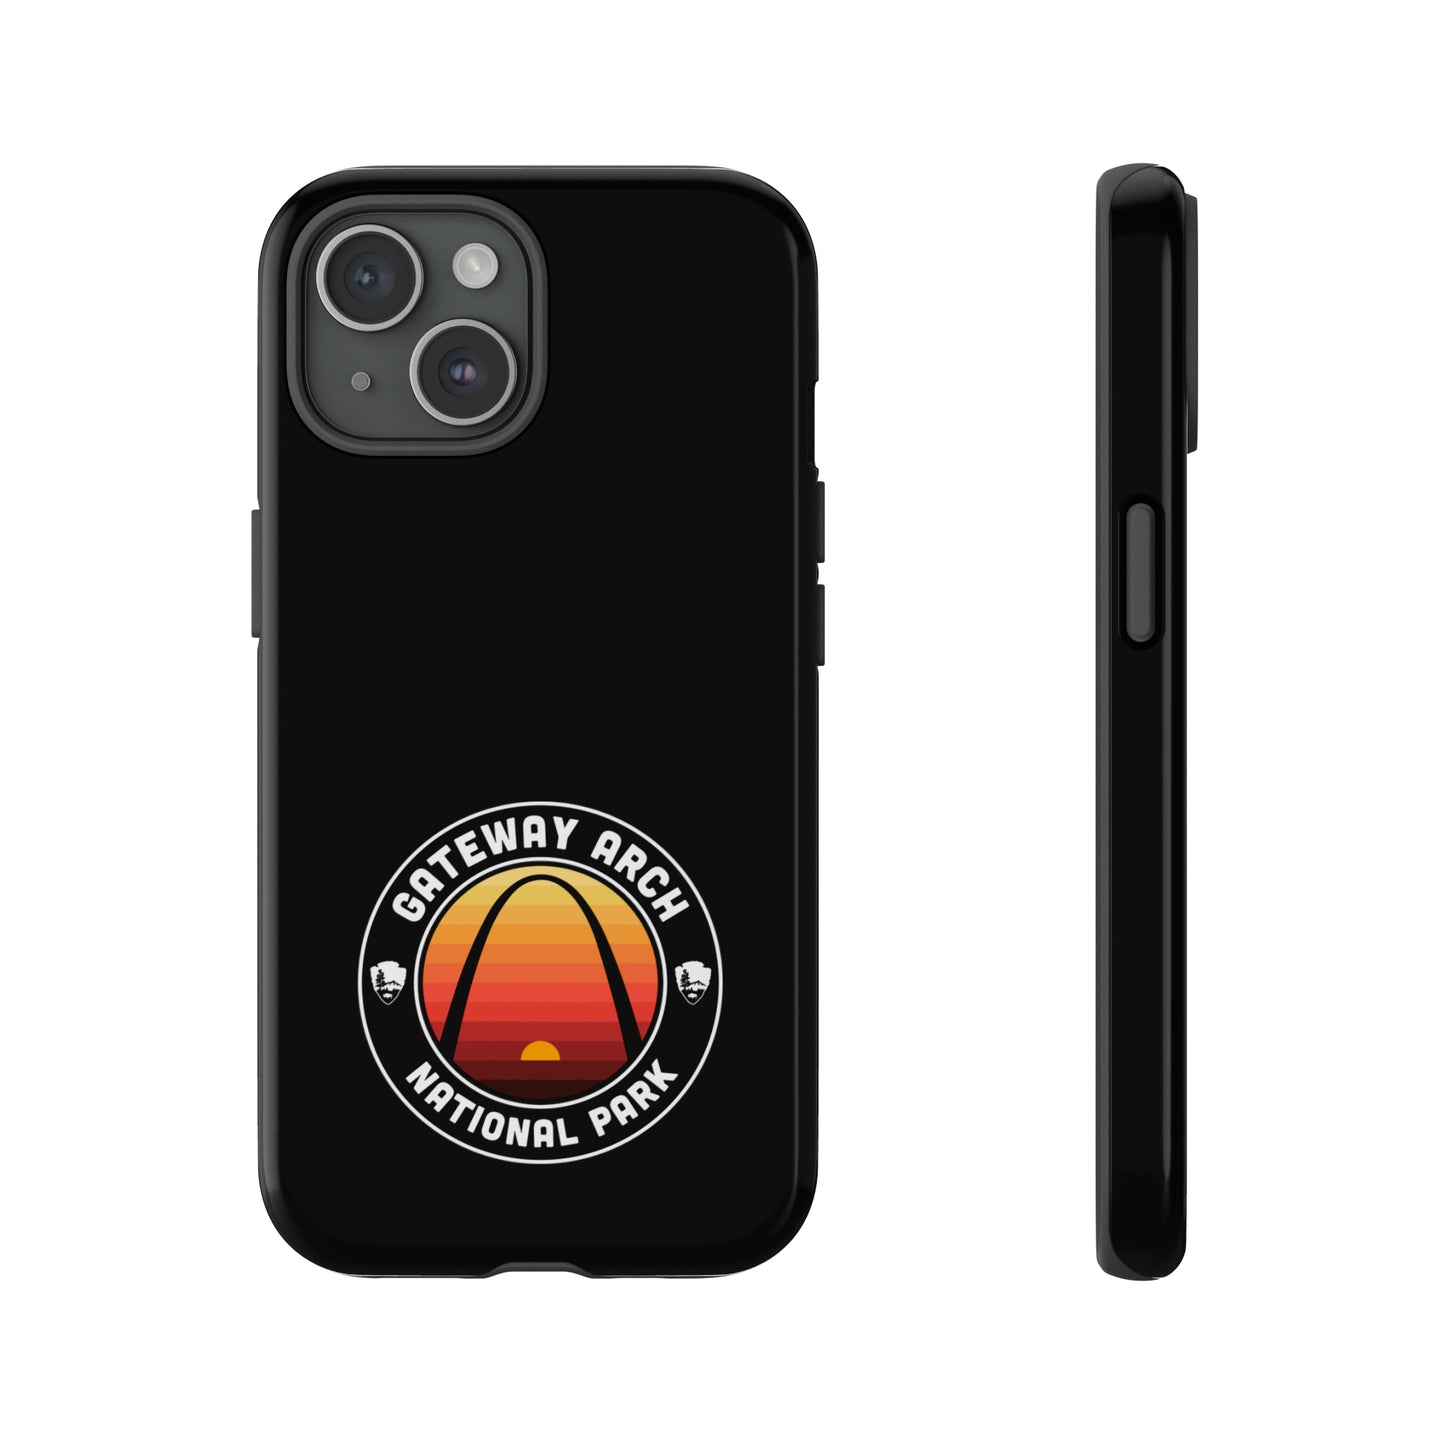 Gateway Arch National Park Phone Case - Round Emblem Design